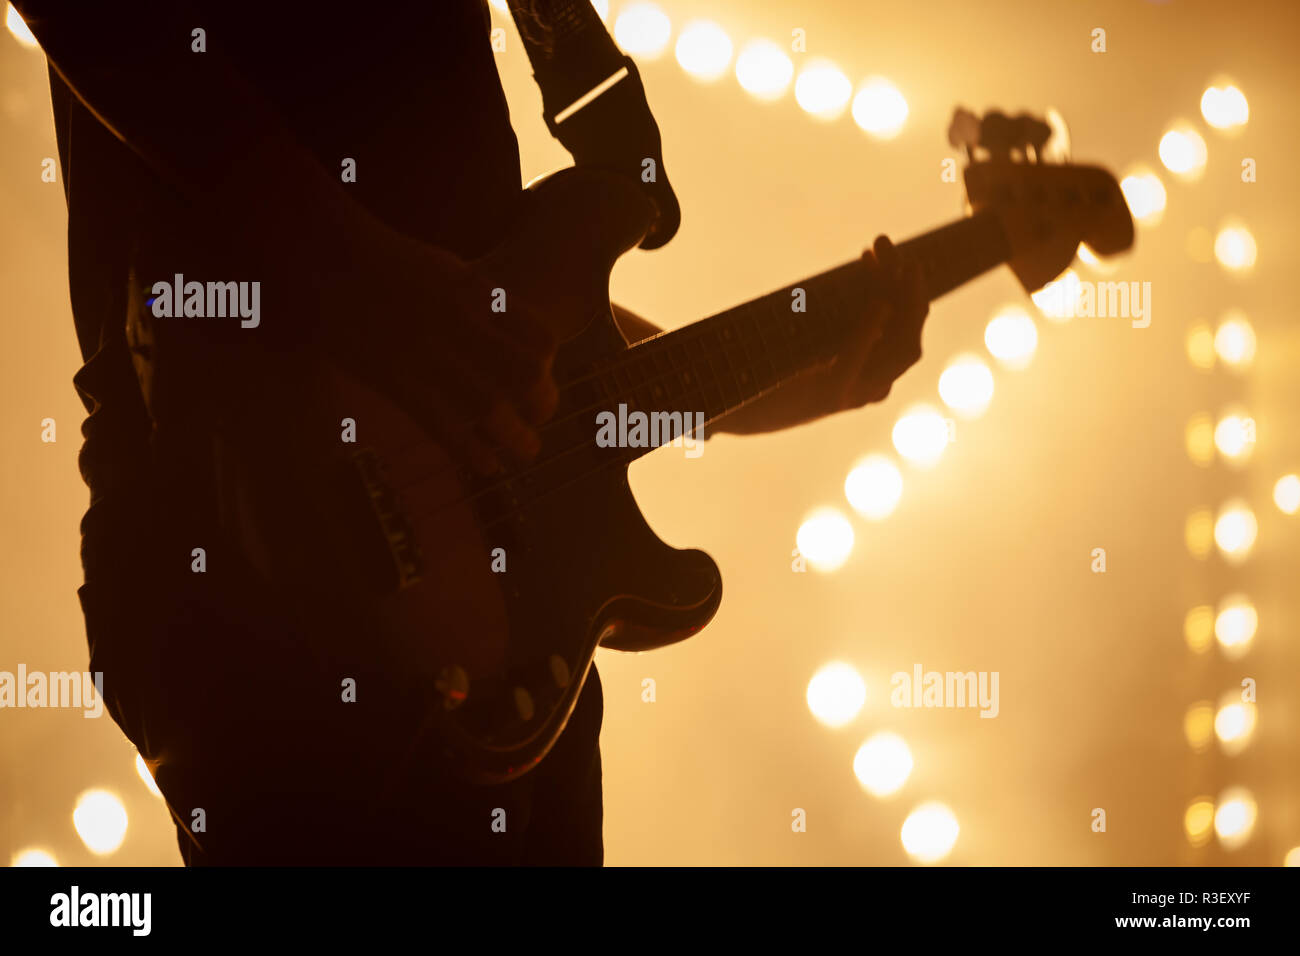 Electric Bass Guitar Player in Stufe Stroboskop-, Close-up silhouette Foto mit weichen selektiven Fokus Stockfoto